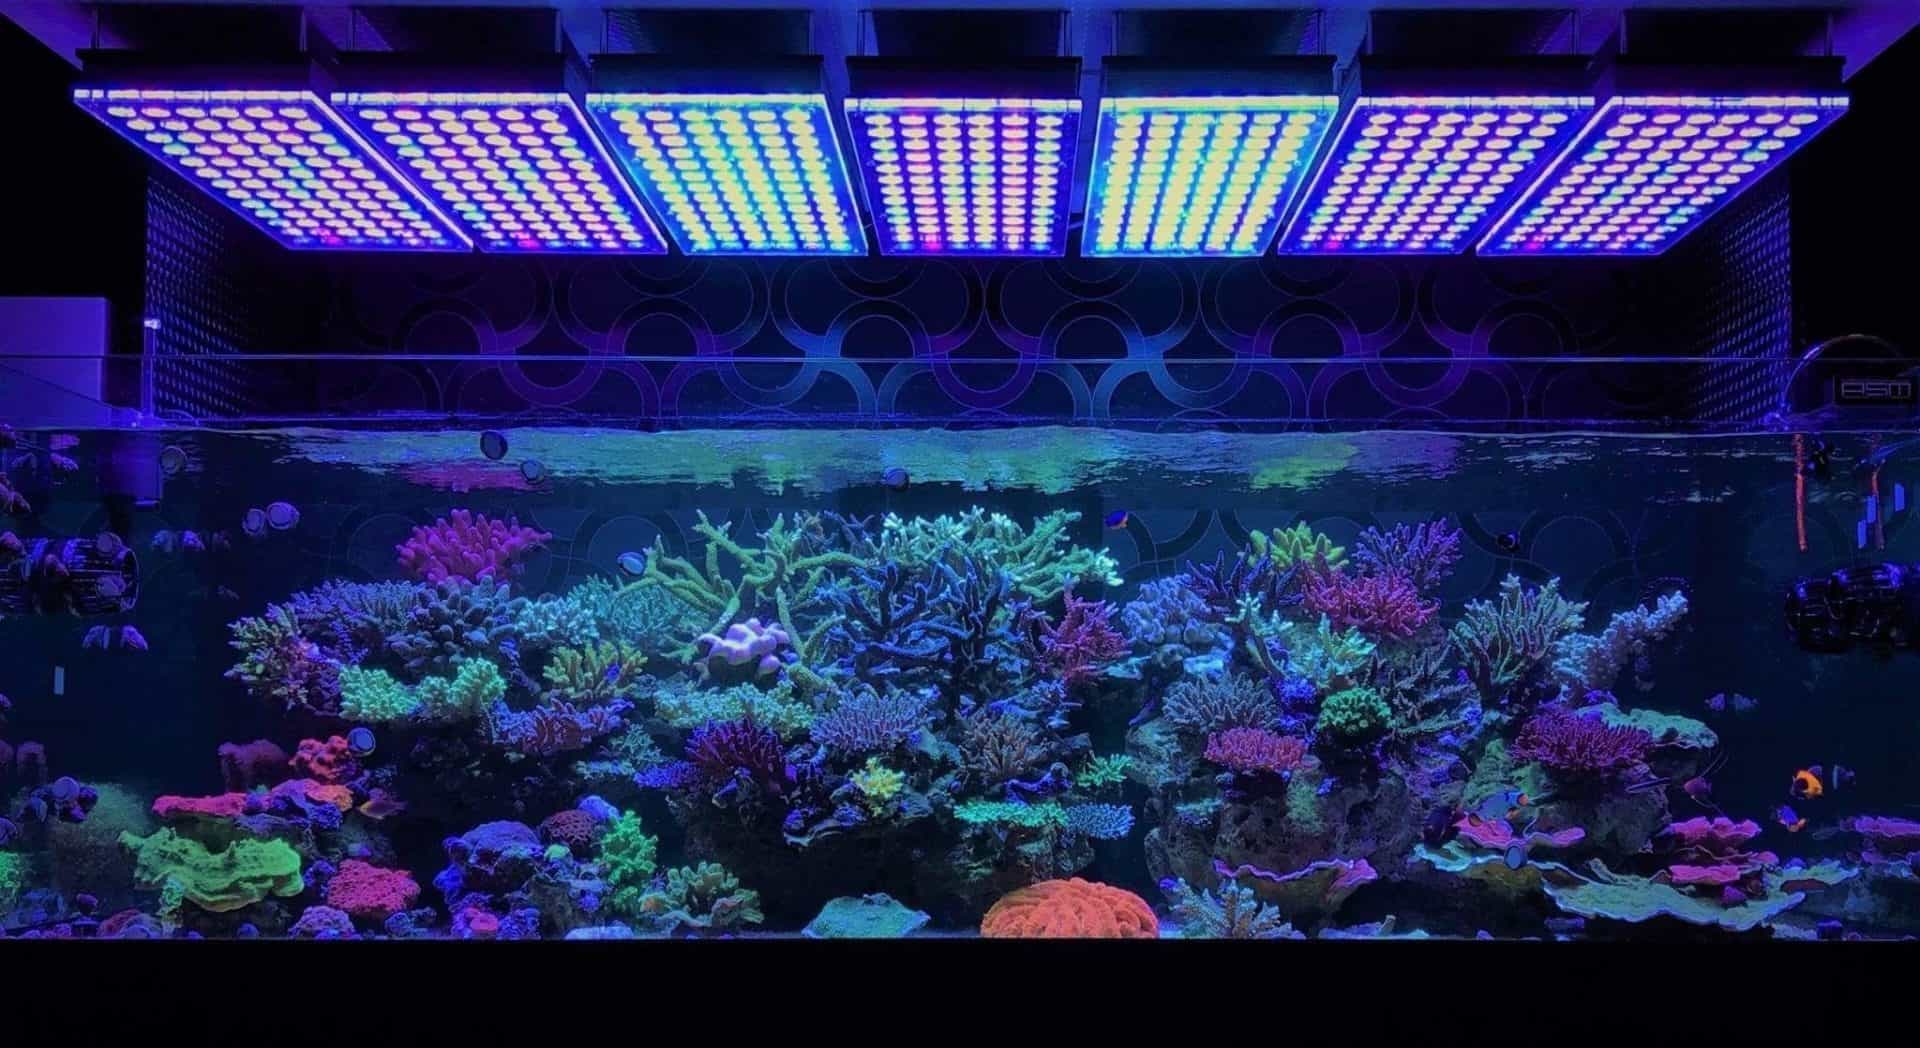 CIPACHO 24 in. Black Multi-Color LED Aquarium Light Full Spectrum  Freshwater Fish Tank Plant Marine T-FH0013104 - The Home Depot